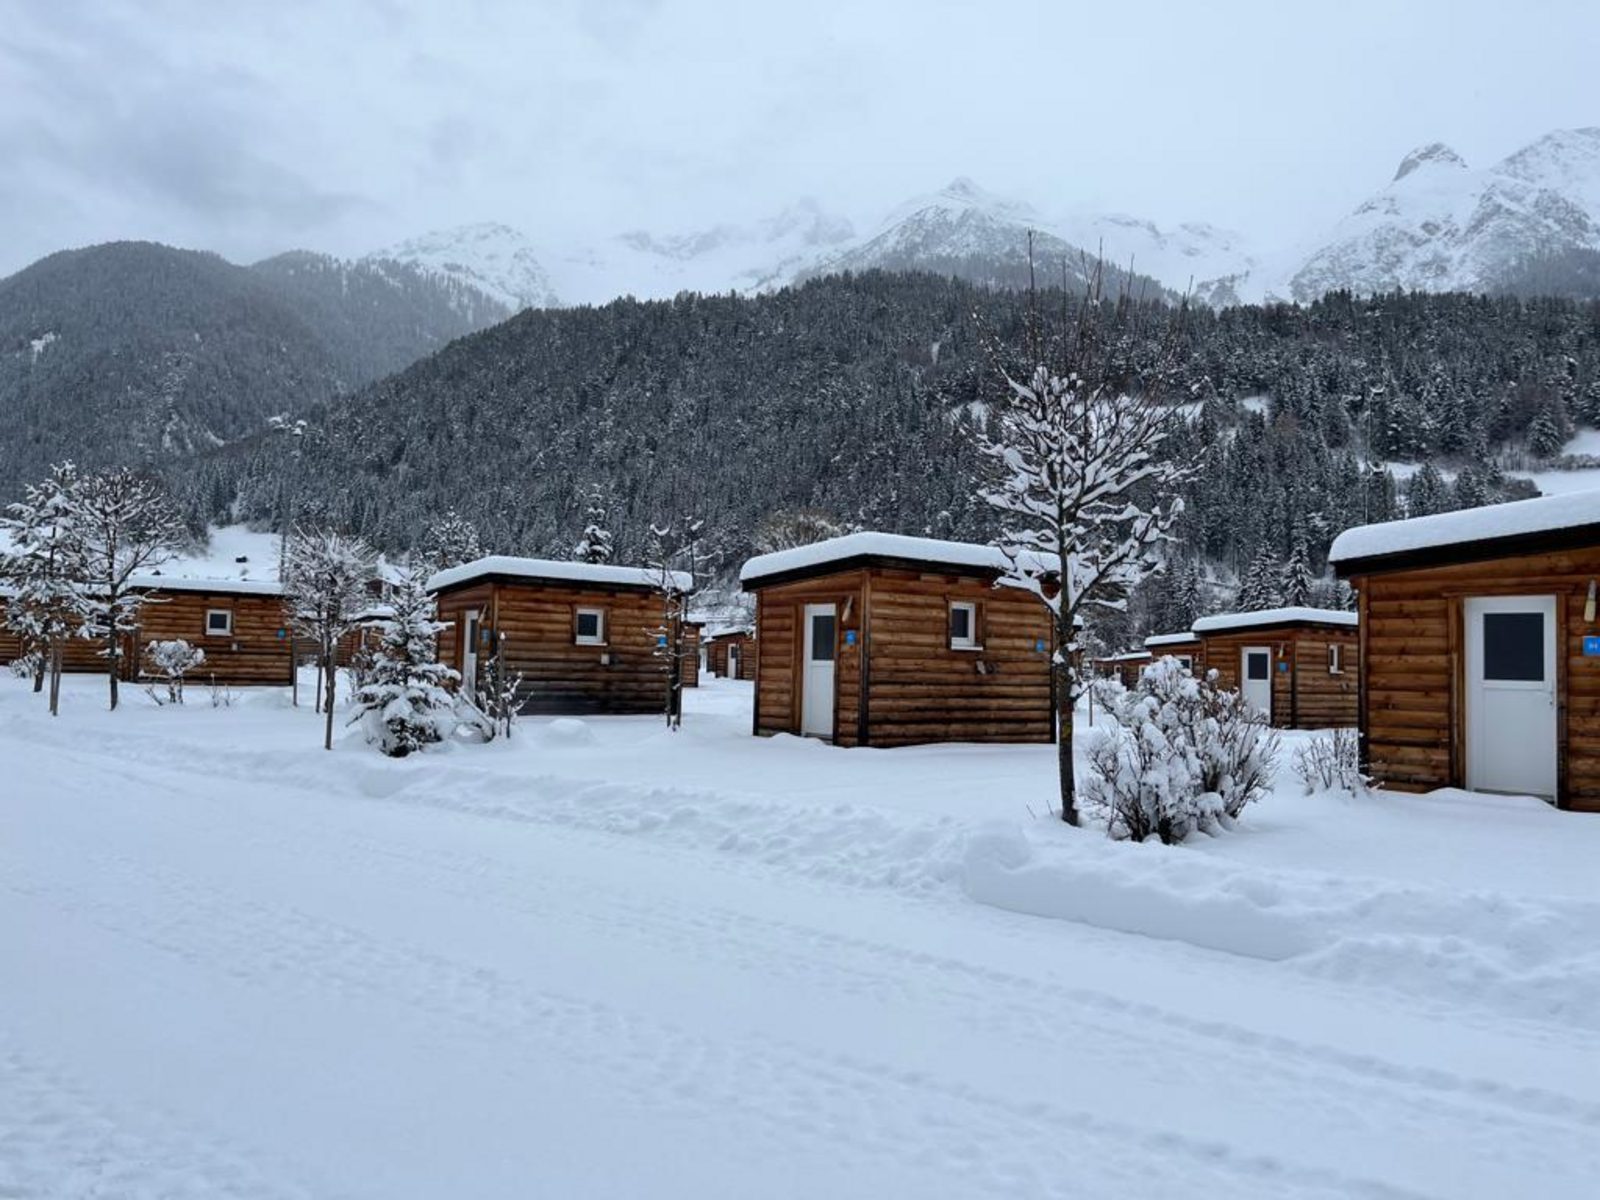 Kampeerplaats Arlberg (incl. privé sanitair)